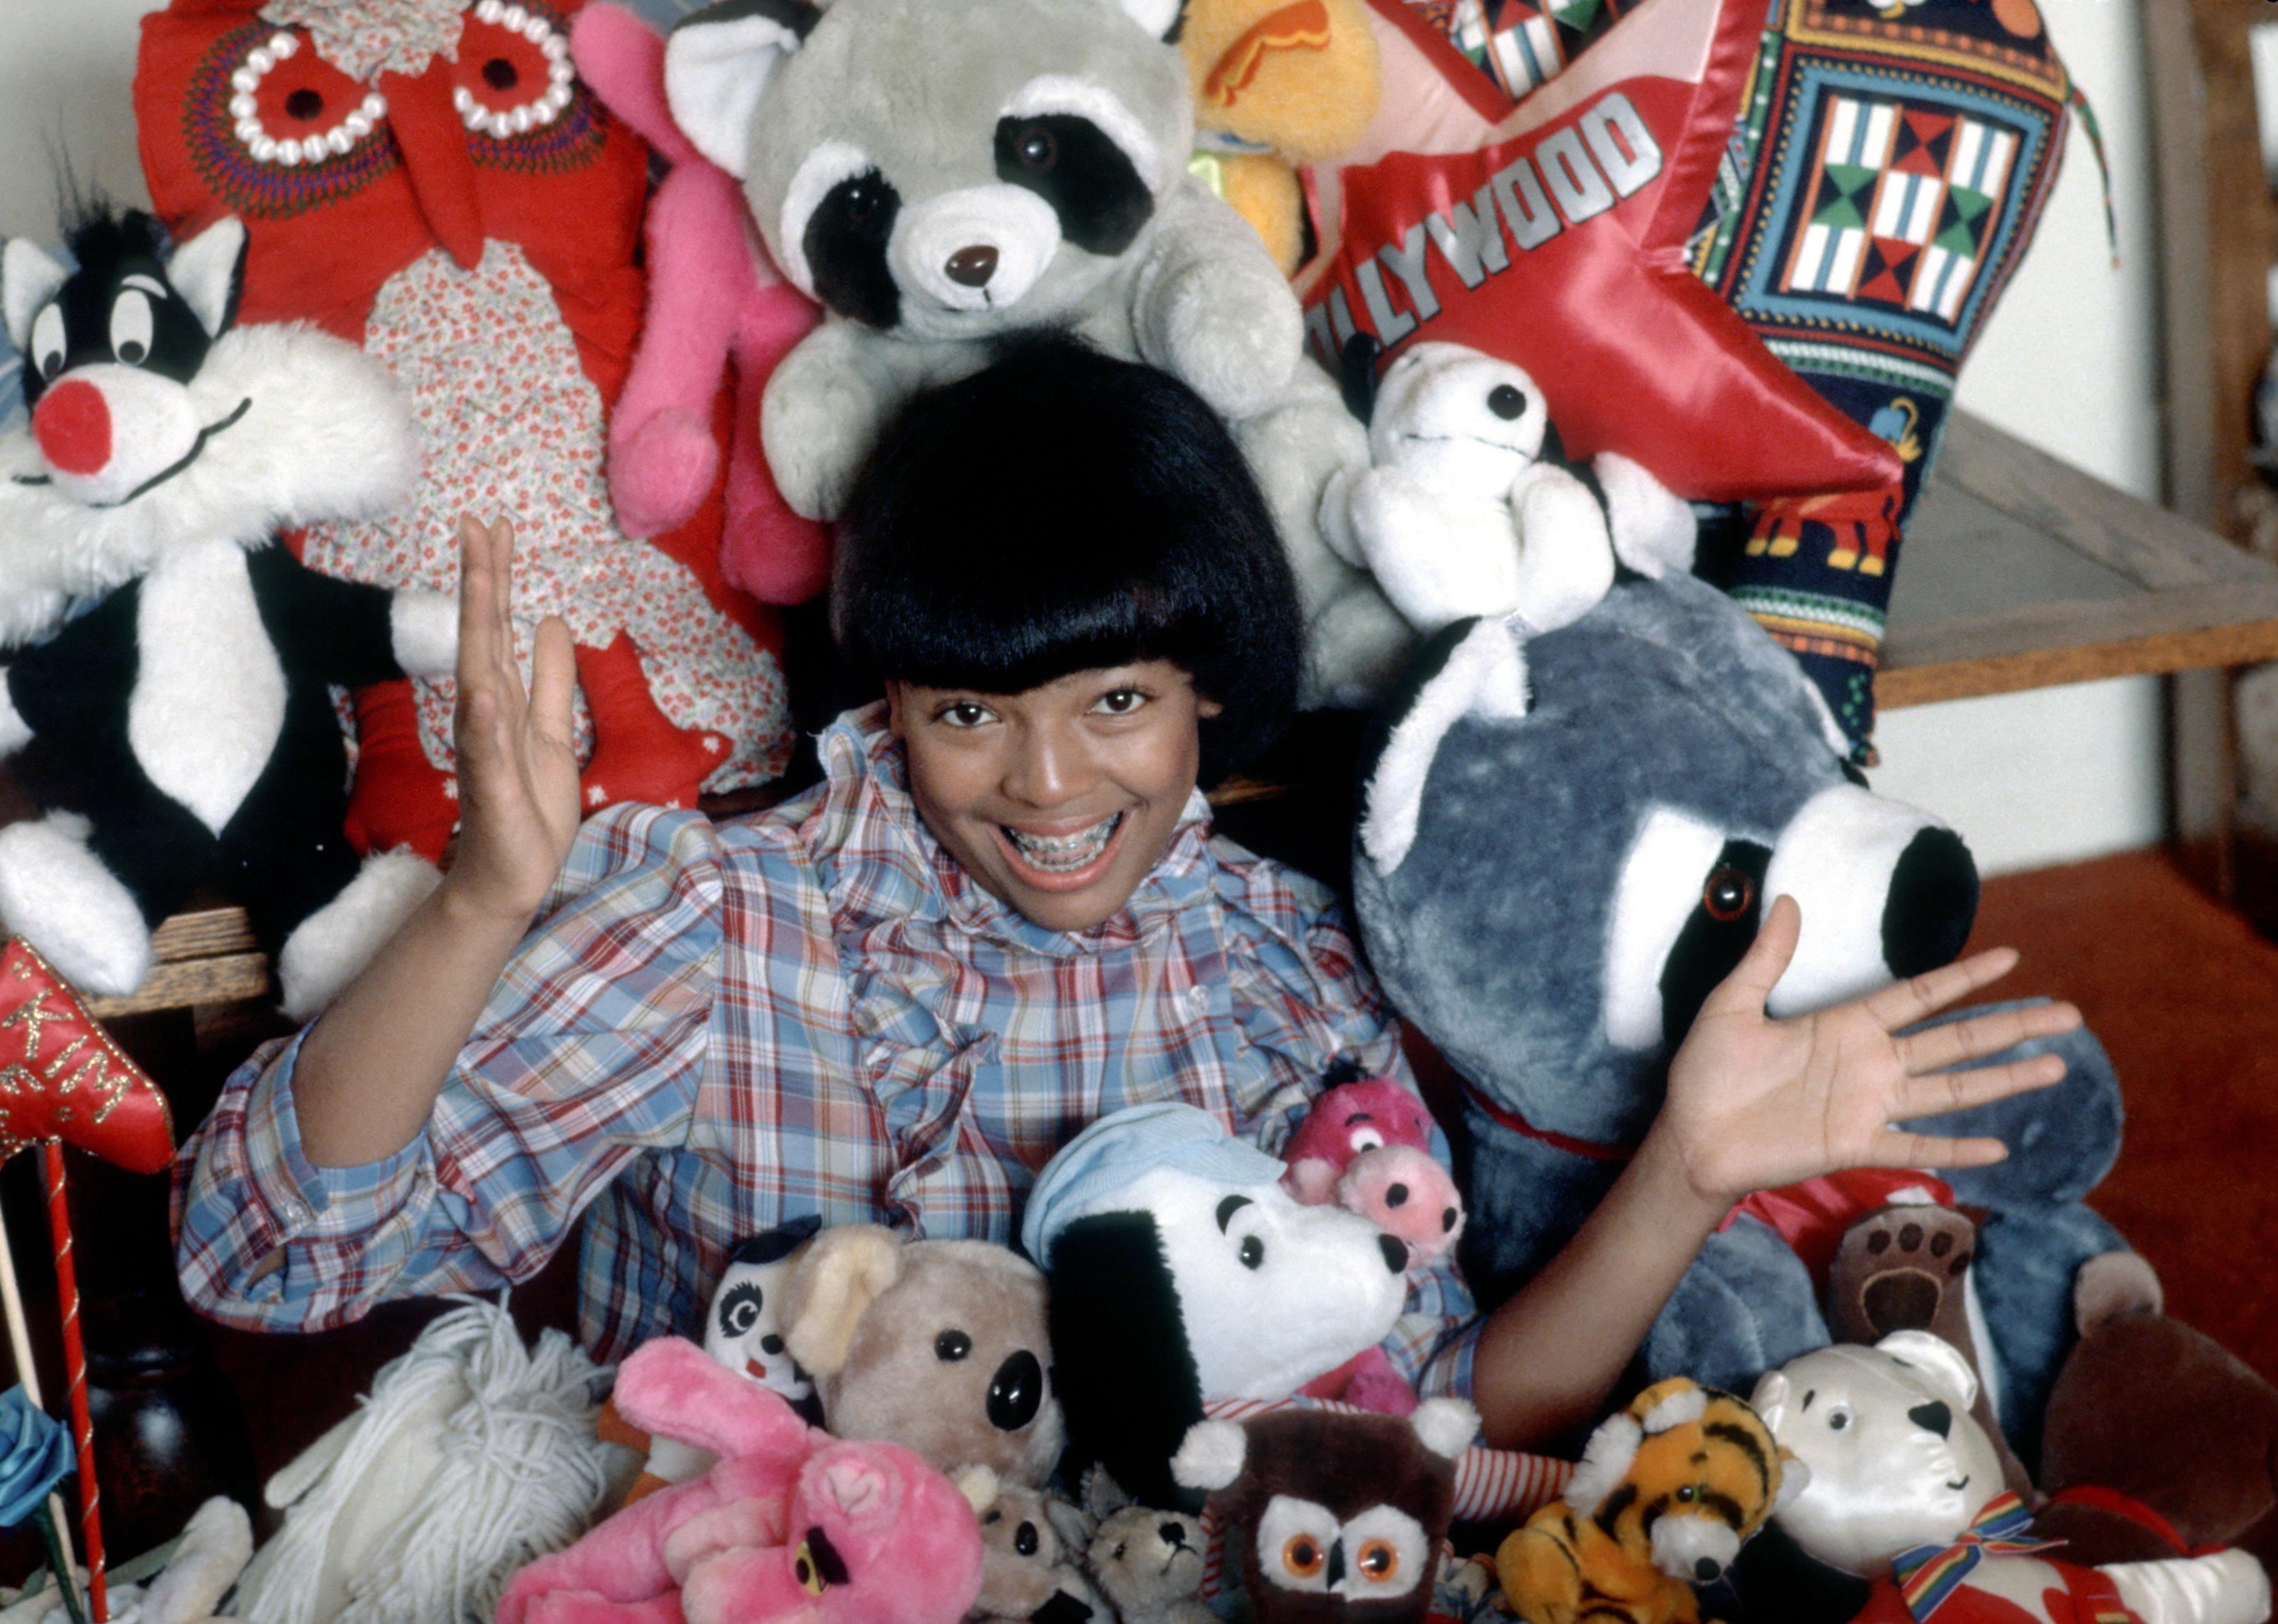 Kim Fields poses with stuffed animals.